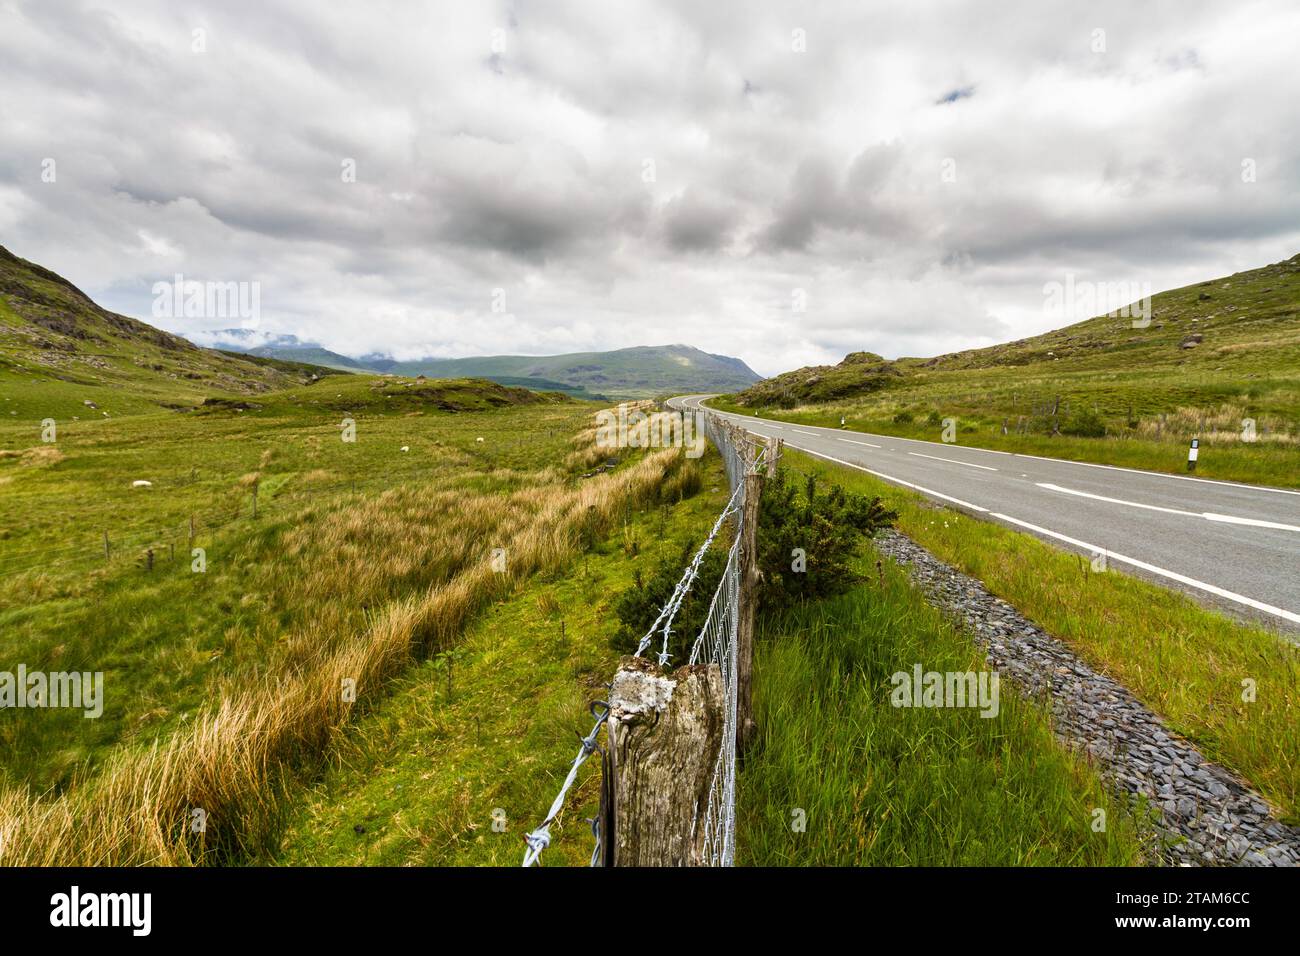 The A470 Road through the Crimea Pass between Blaenau Ffestiniog and Dolwyddelan. Eryri or Snowdonia national Park, Wales, landscape. Stock Photo